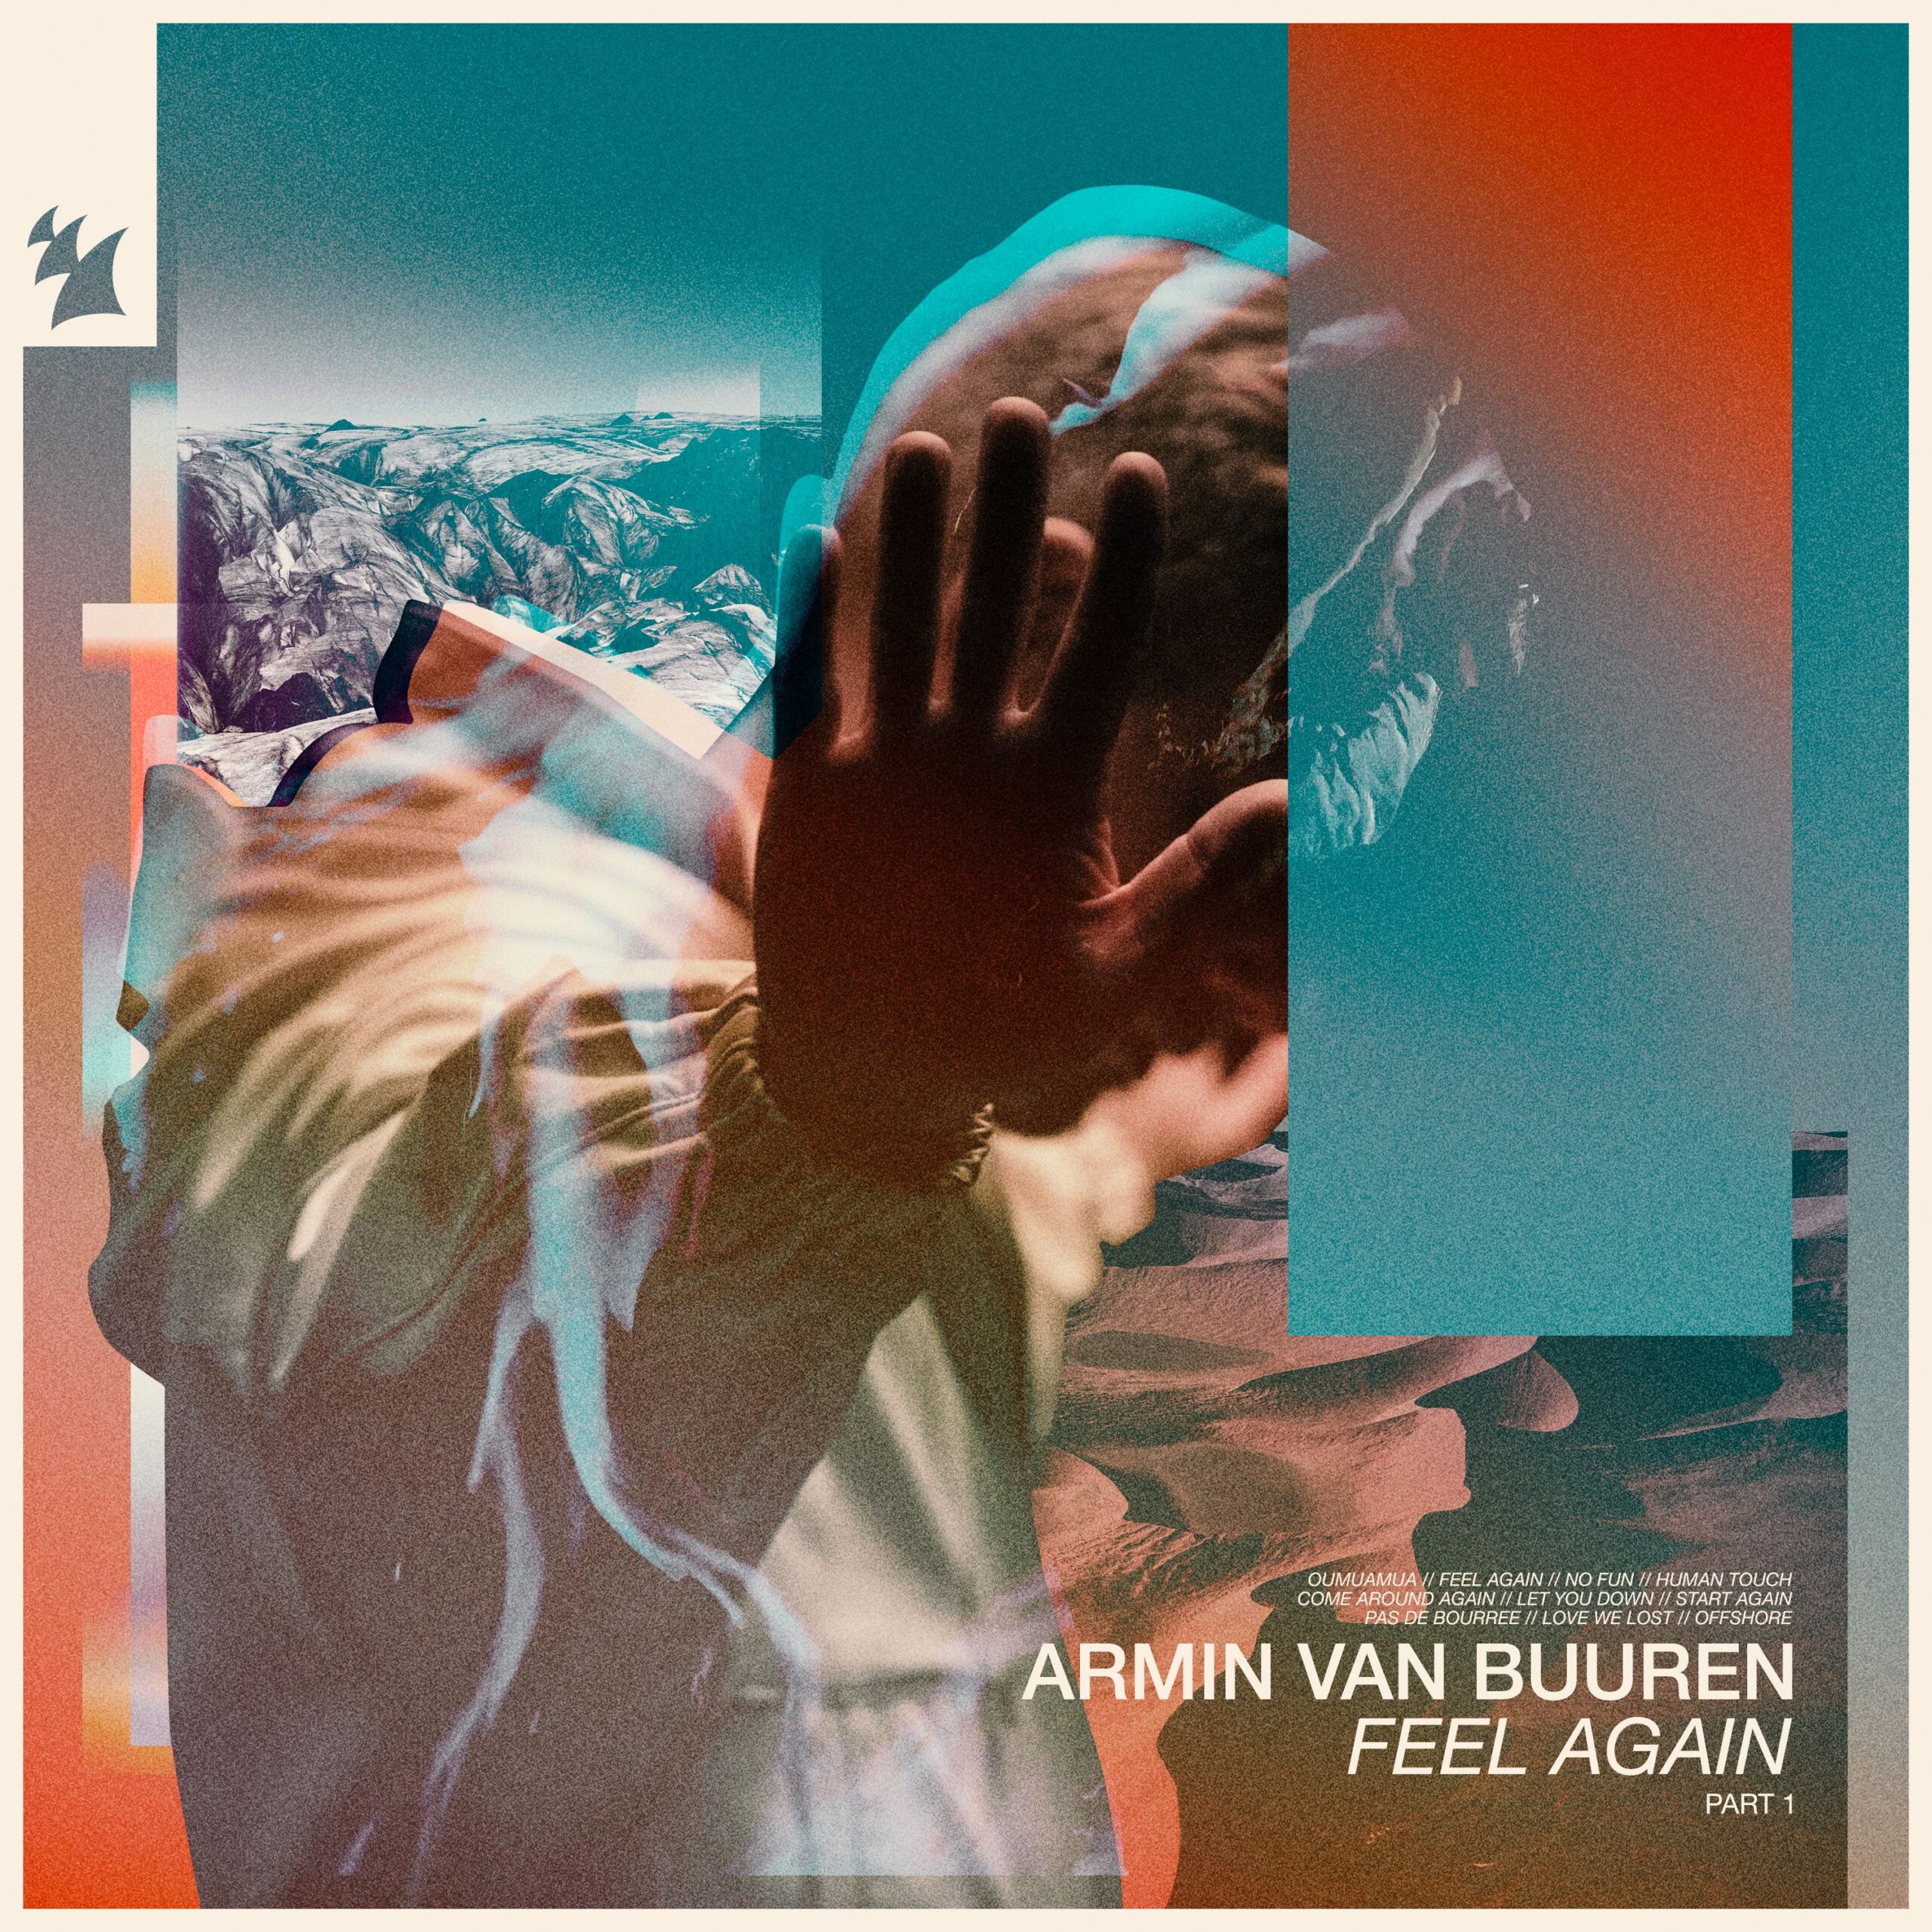 Armin van Buuren presents Feel Again part 1 on Armada Music